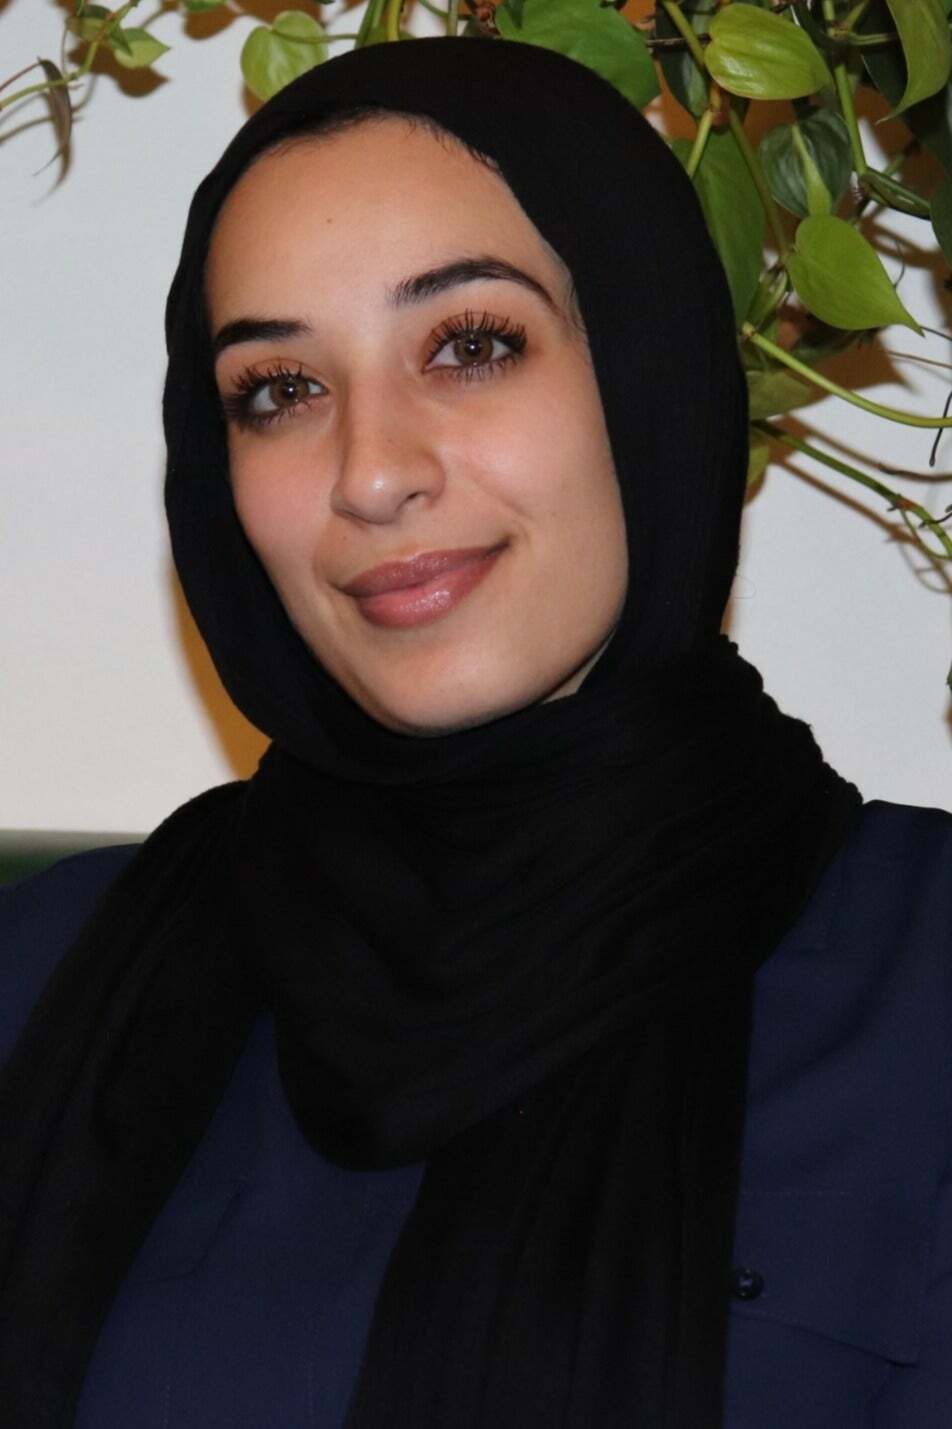 Nemah Abdel-Fattah, Real Estate Salesperson in Greenfield, Homesale Realty